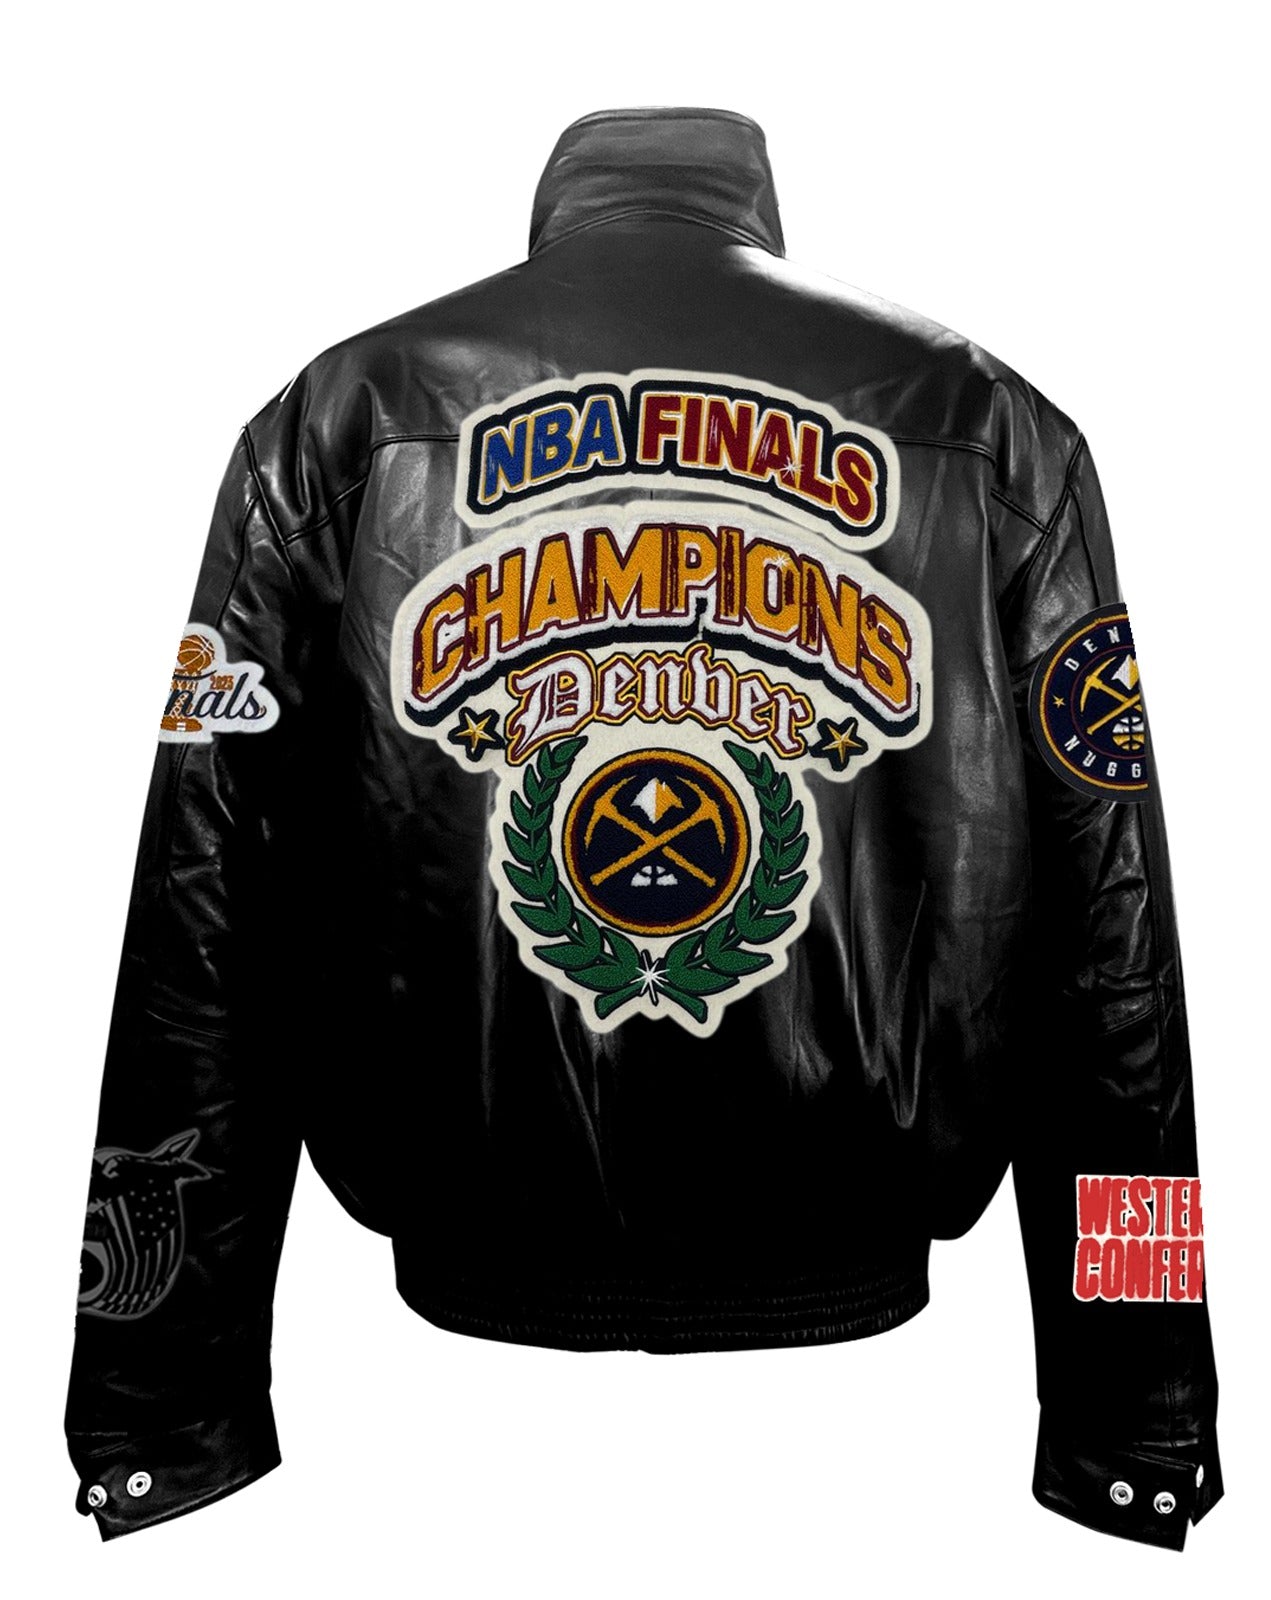 Lakers Championship Leather Jacket